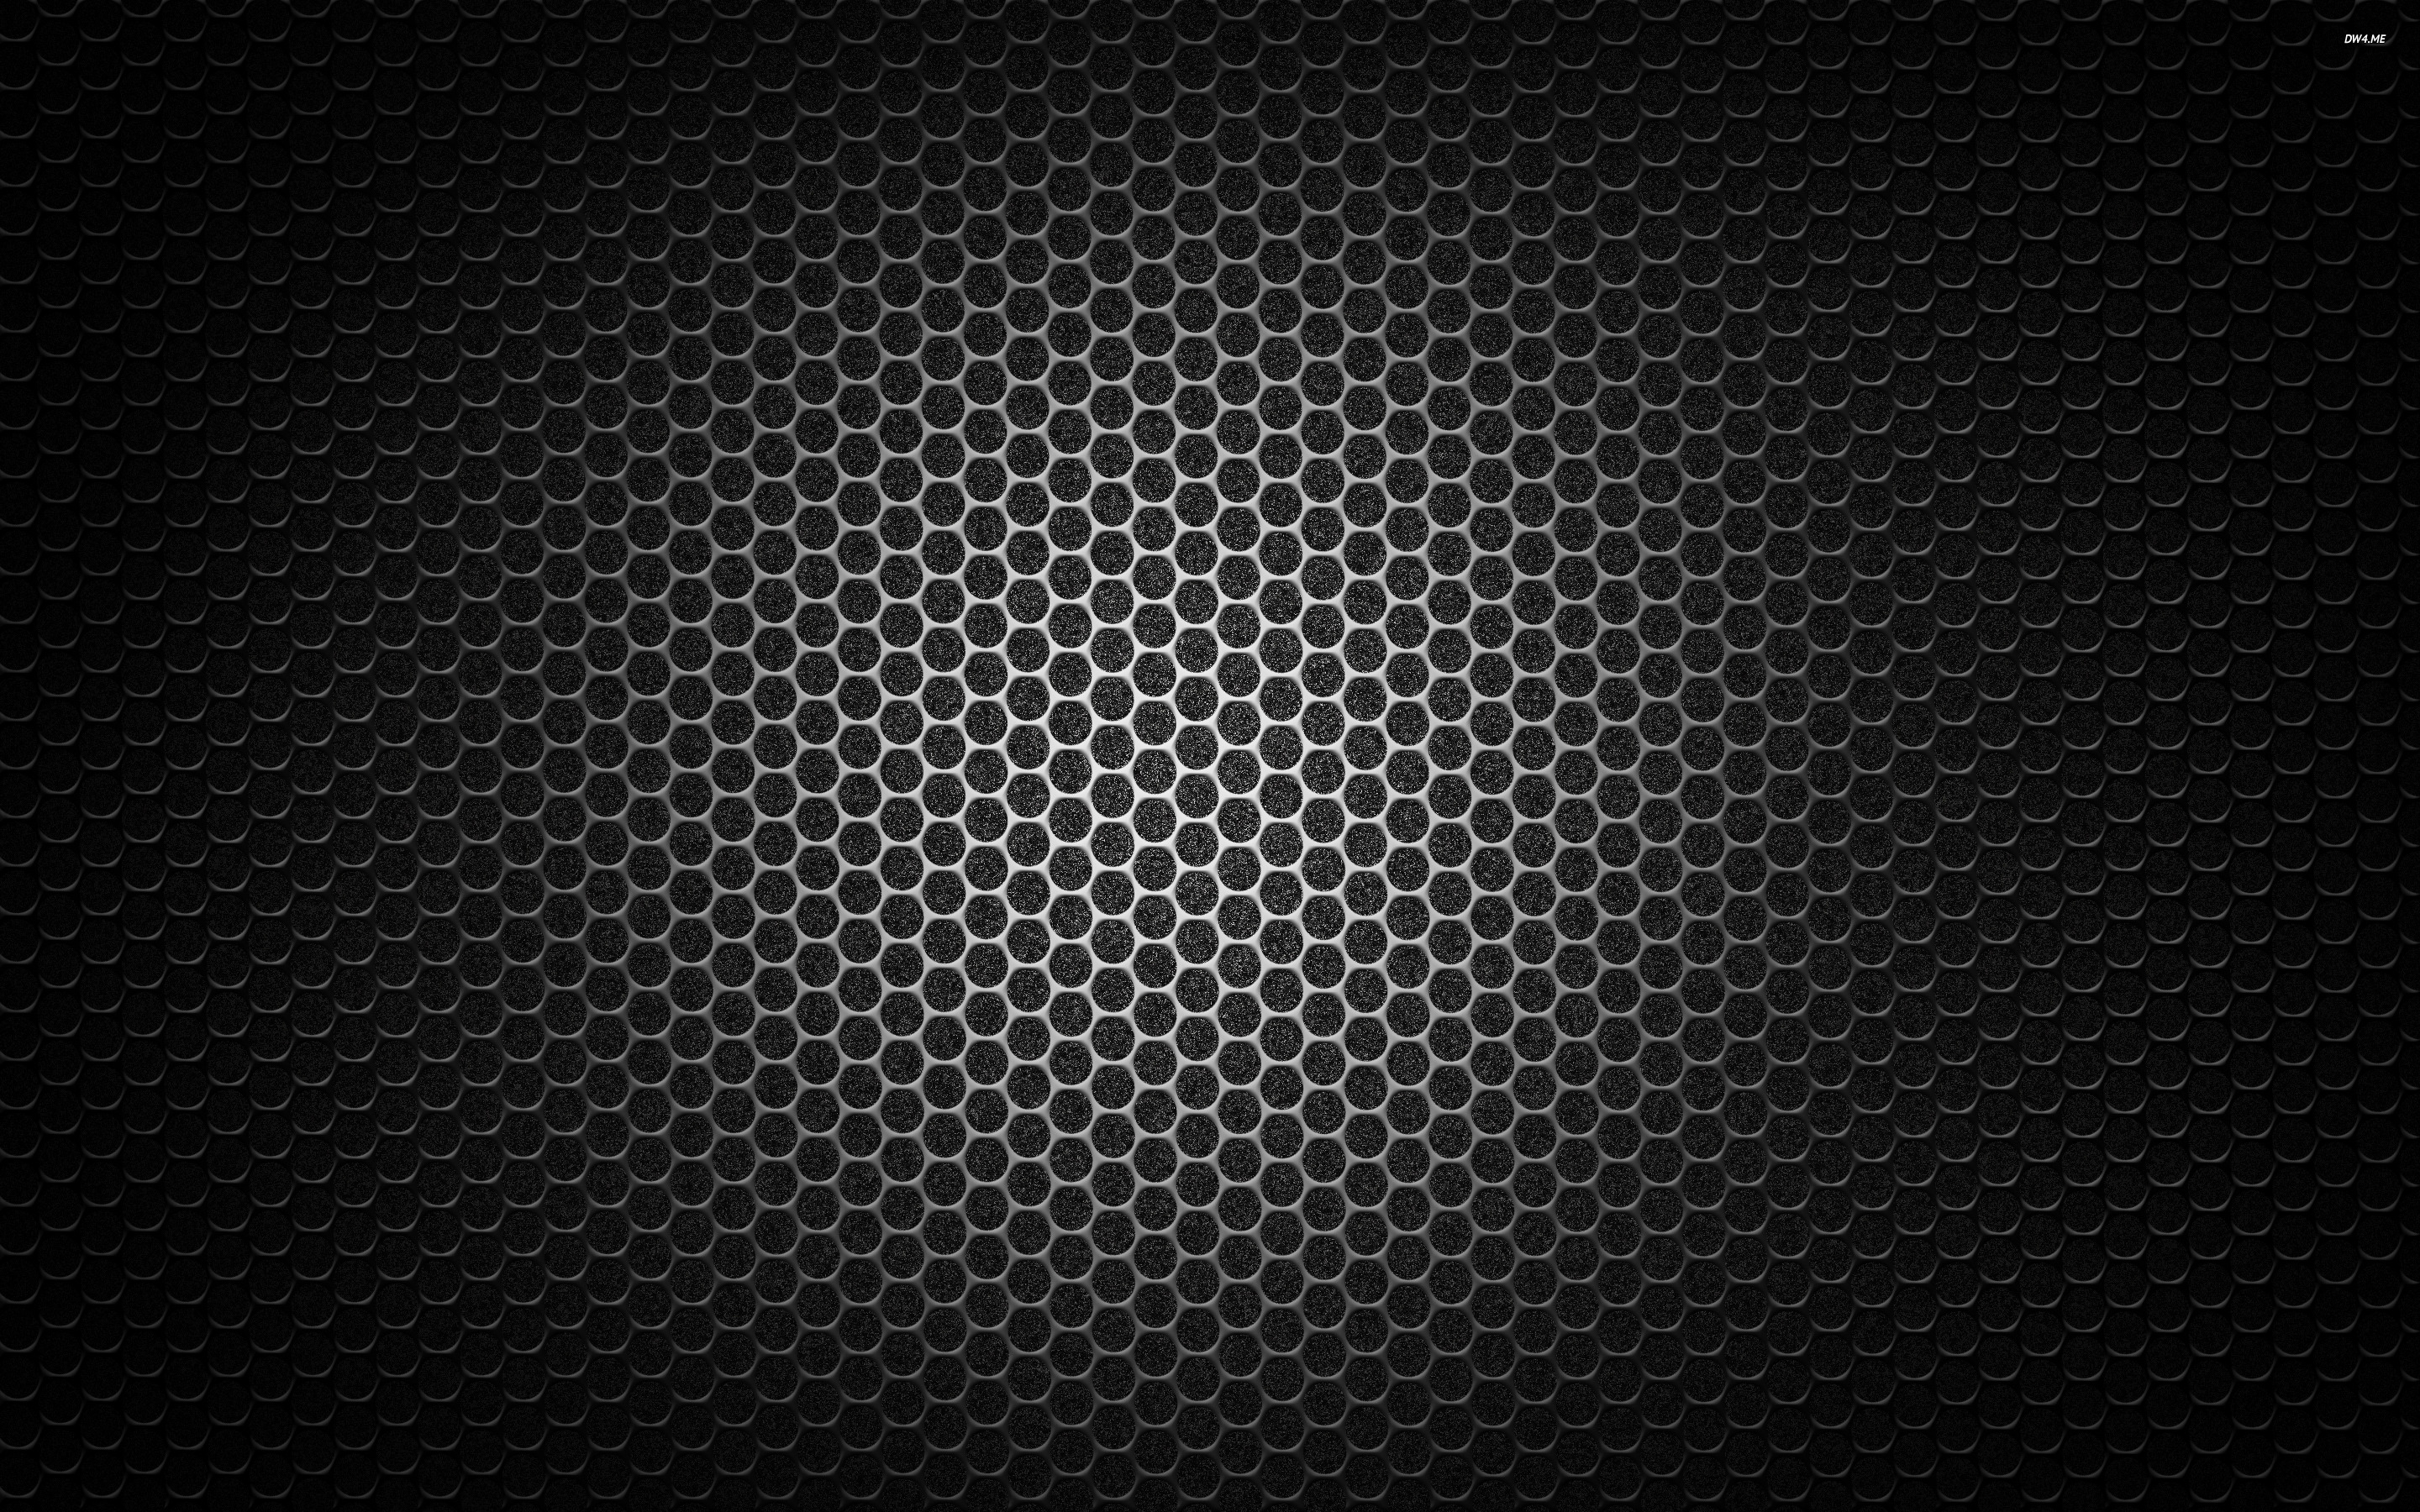 air jordan wallpaper,black,pattern,brown,monochrome,design